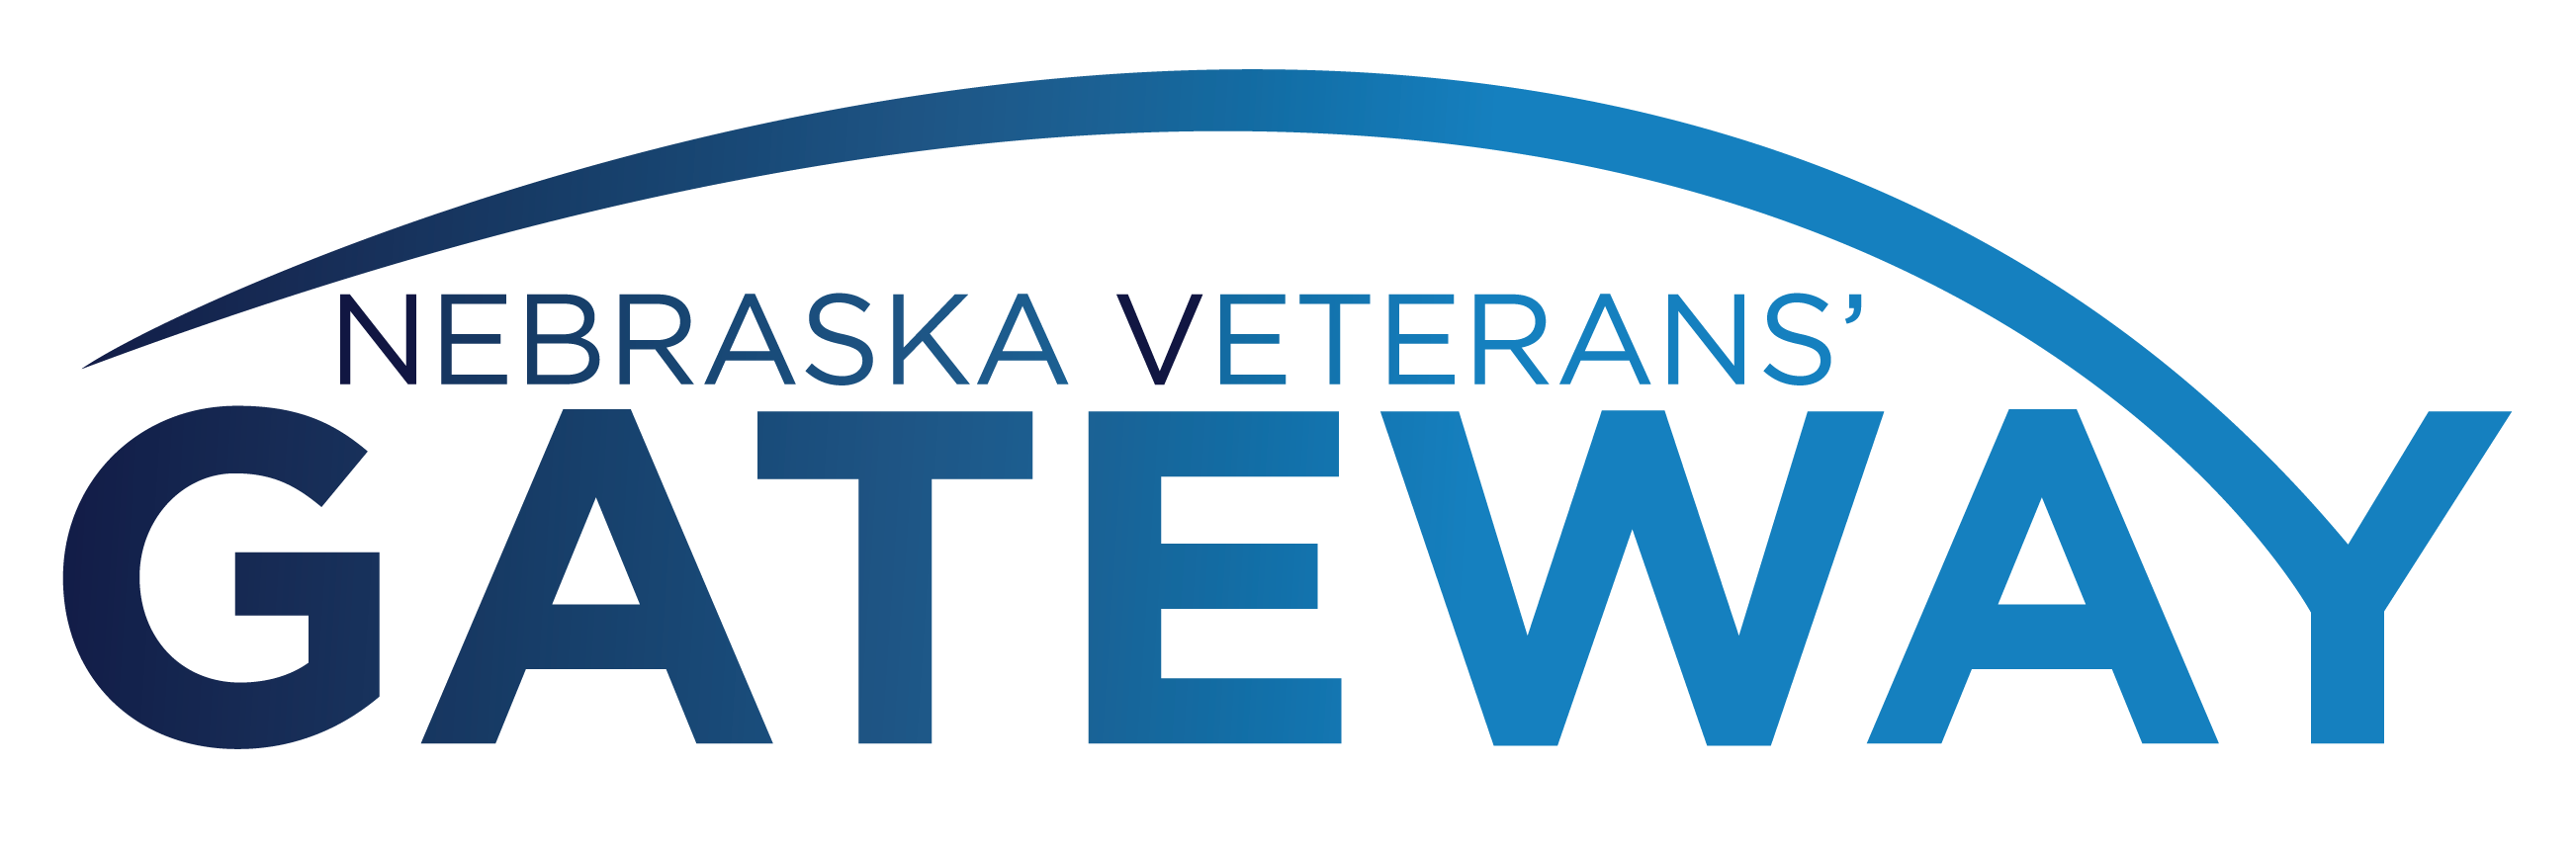 Nebraska Veterans' Gateway Logo